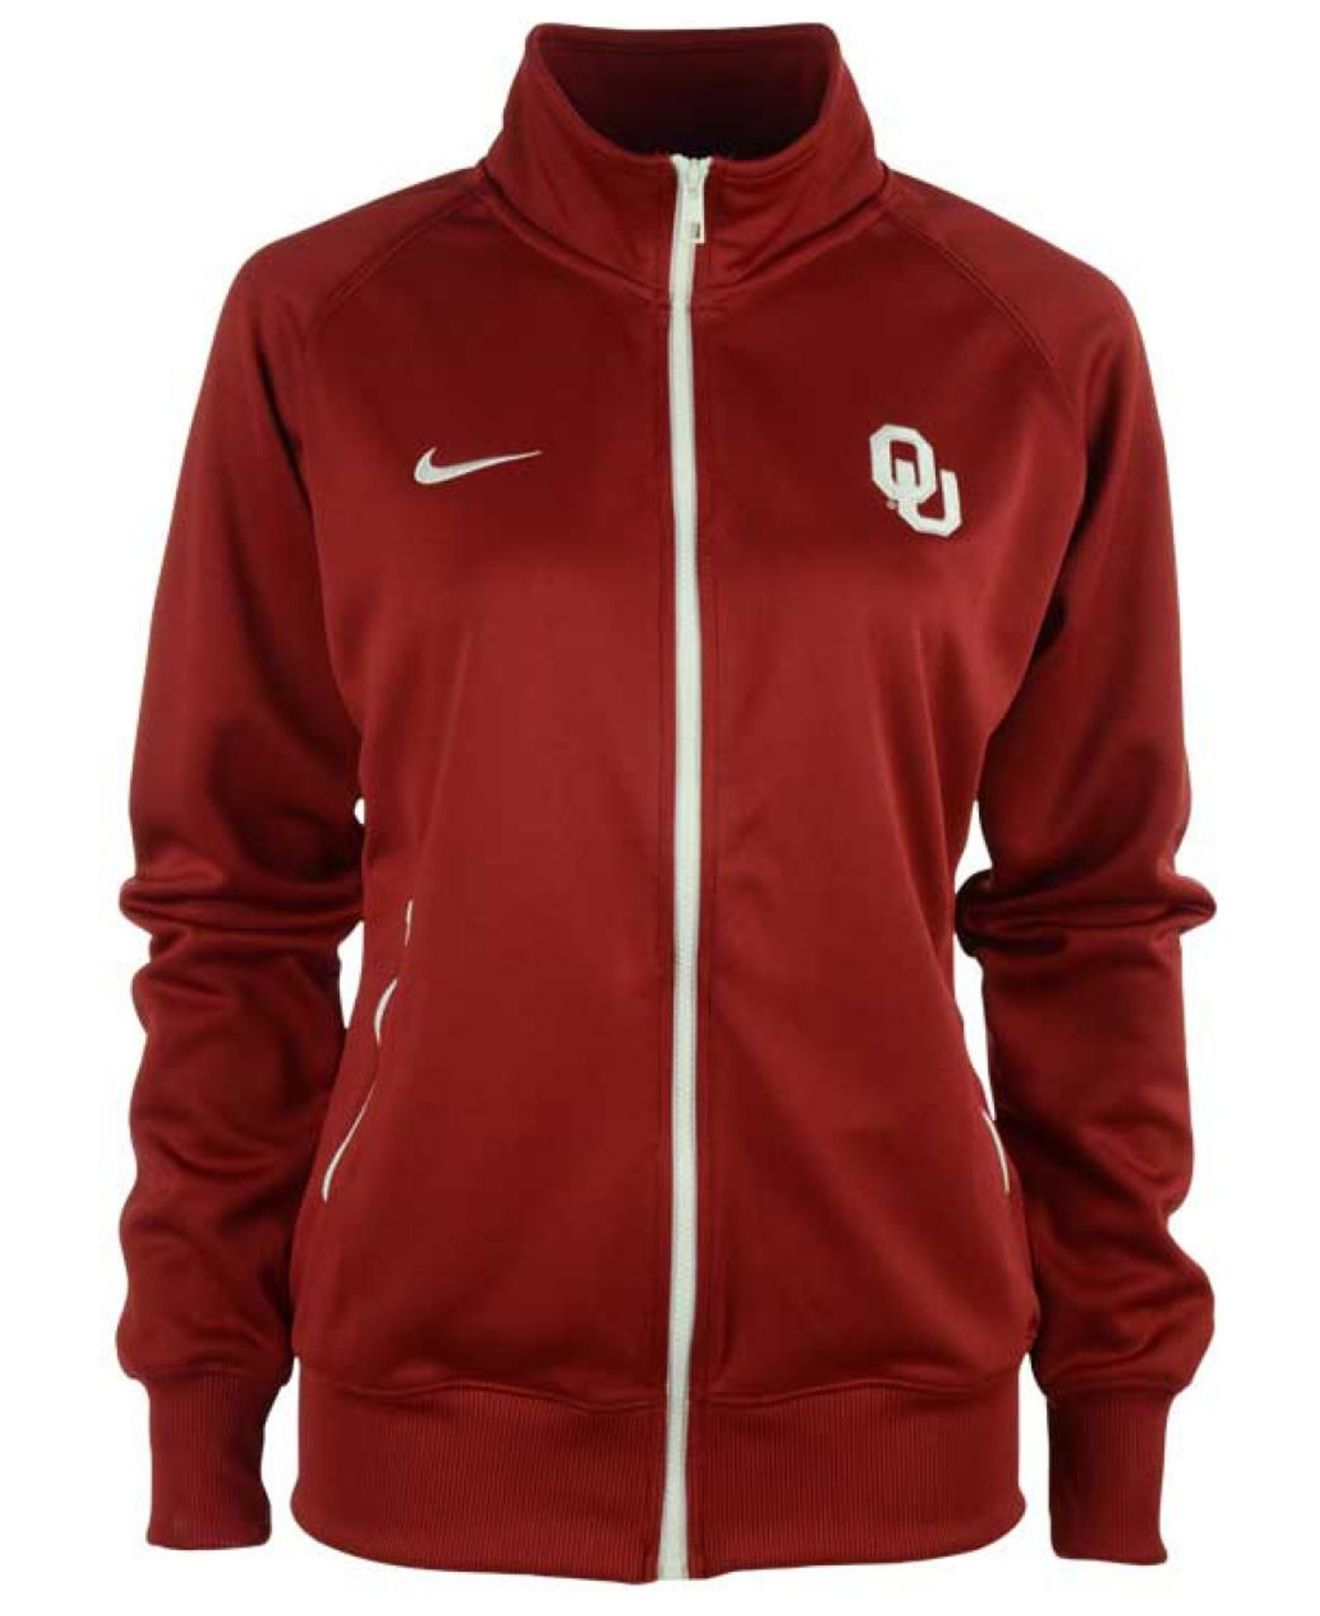 Lyst - Nike Women's Oklahoma Sooners Stadium Track Jacket in Red